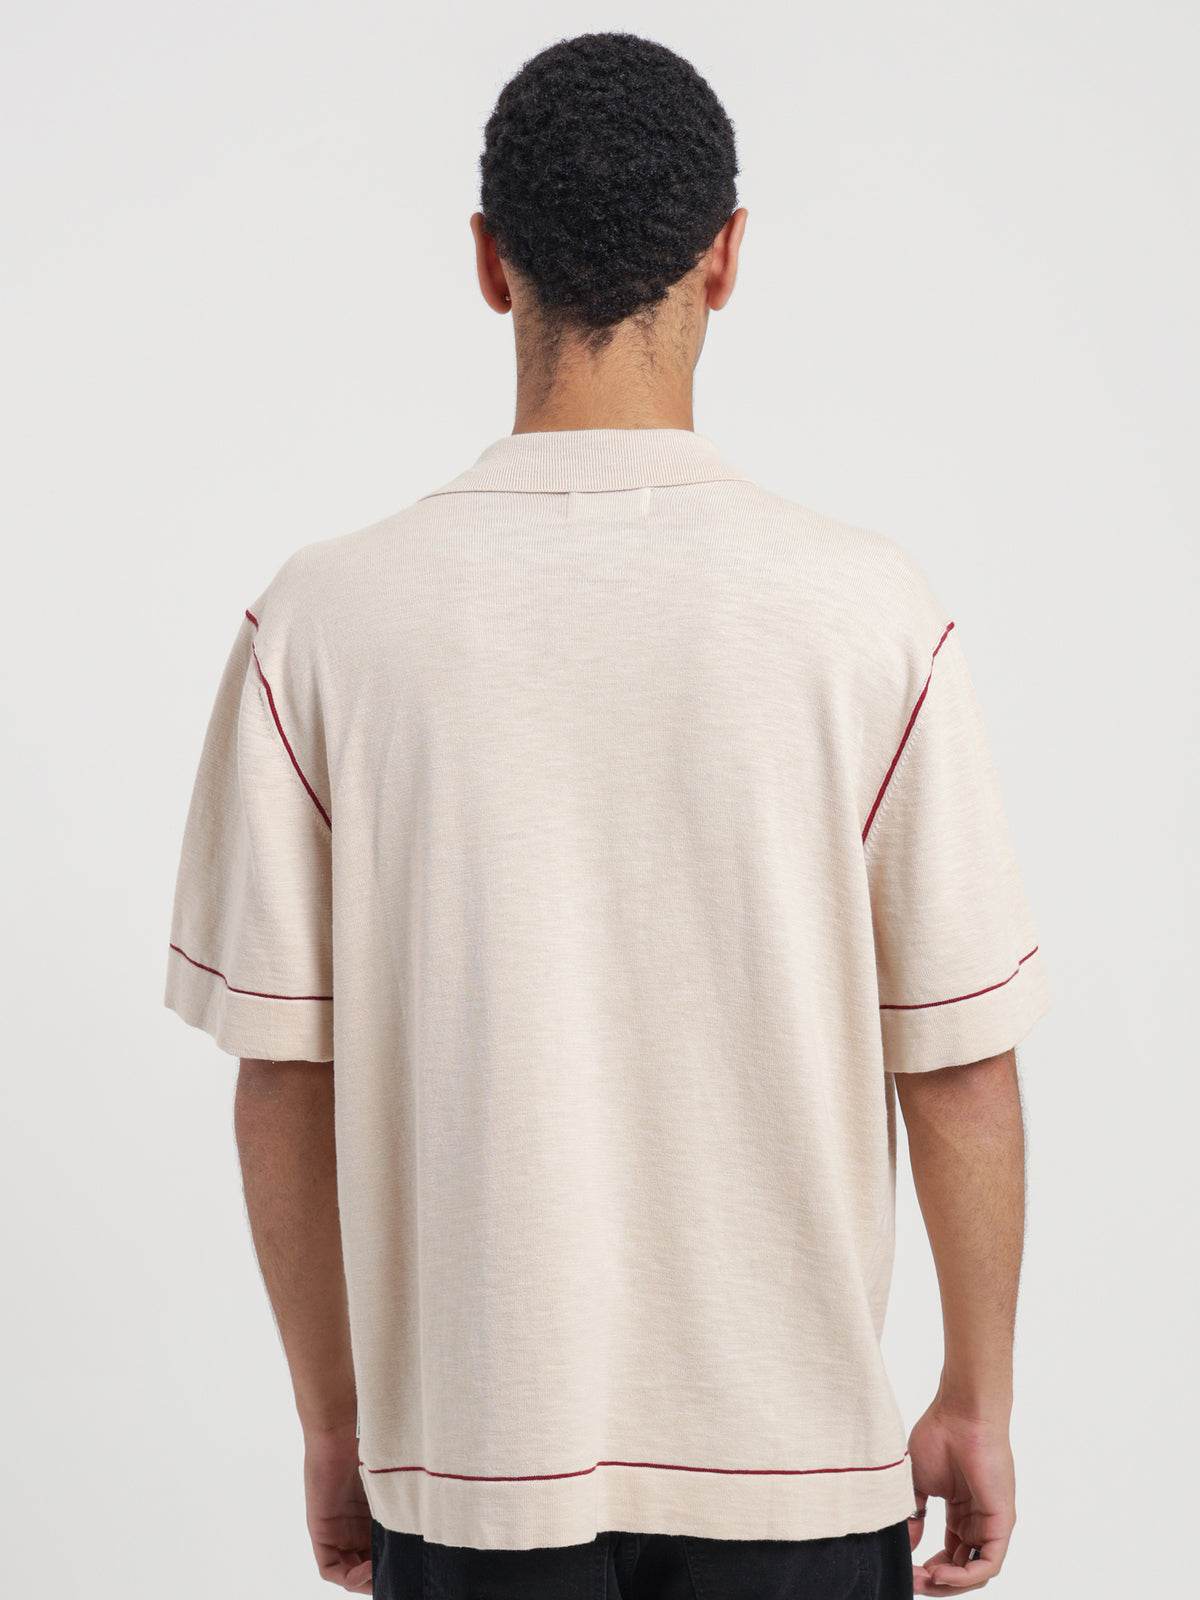 Albius Knit Shirt in Natural